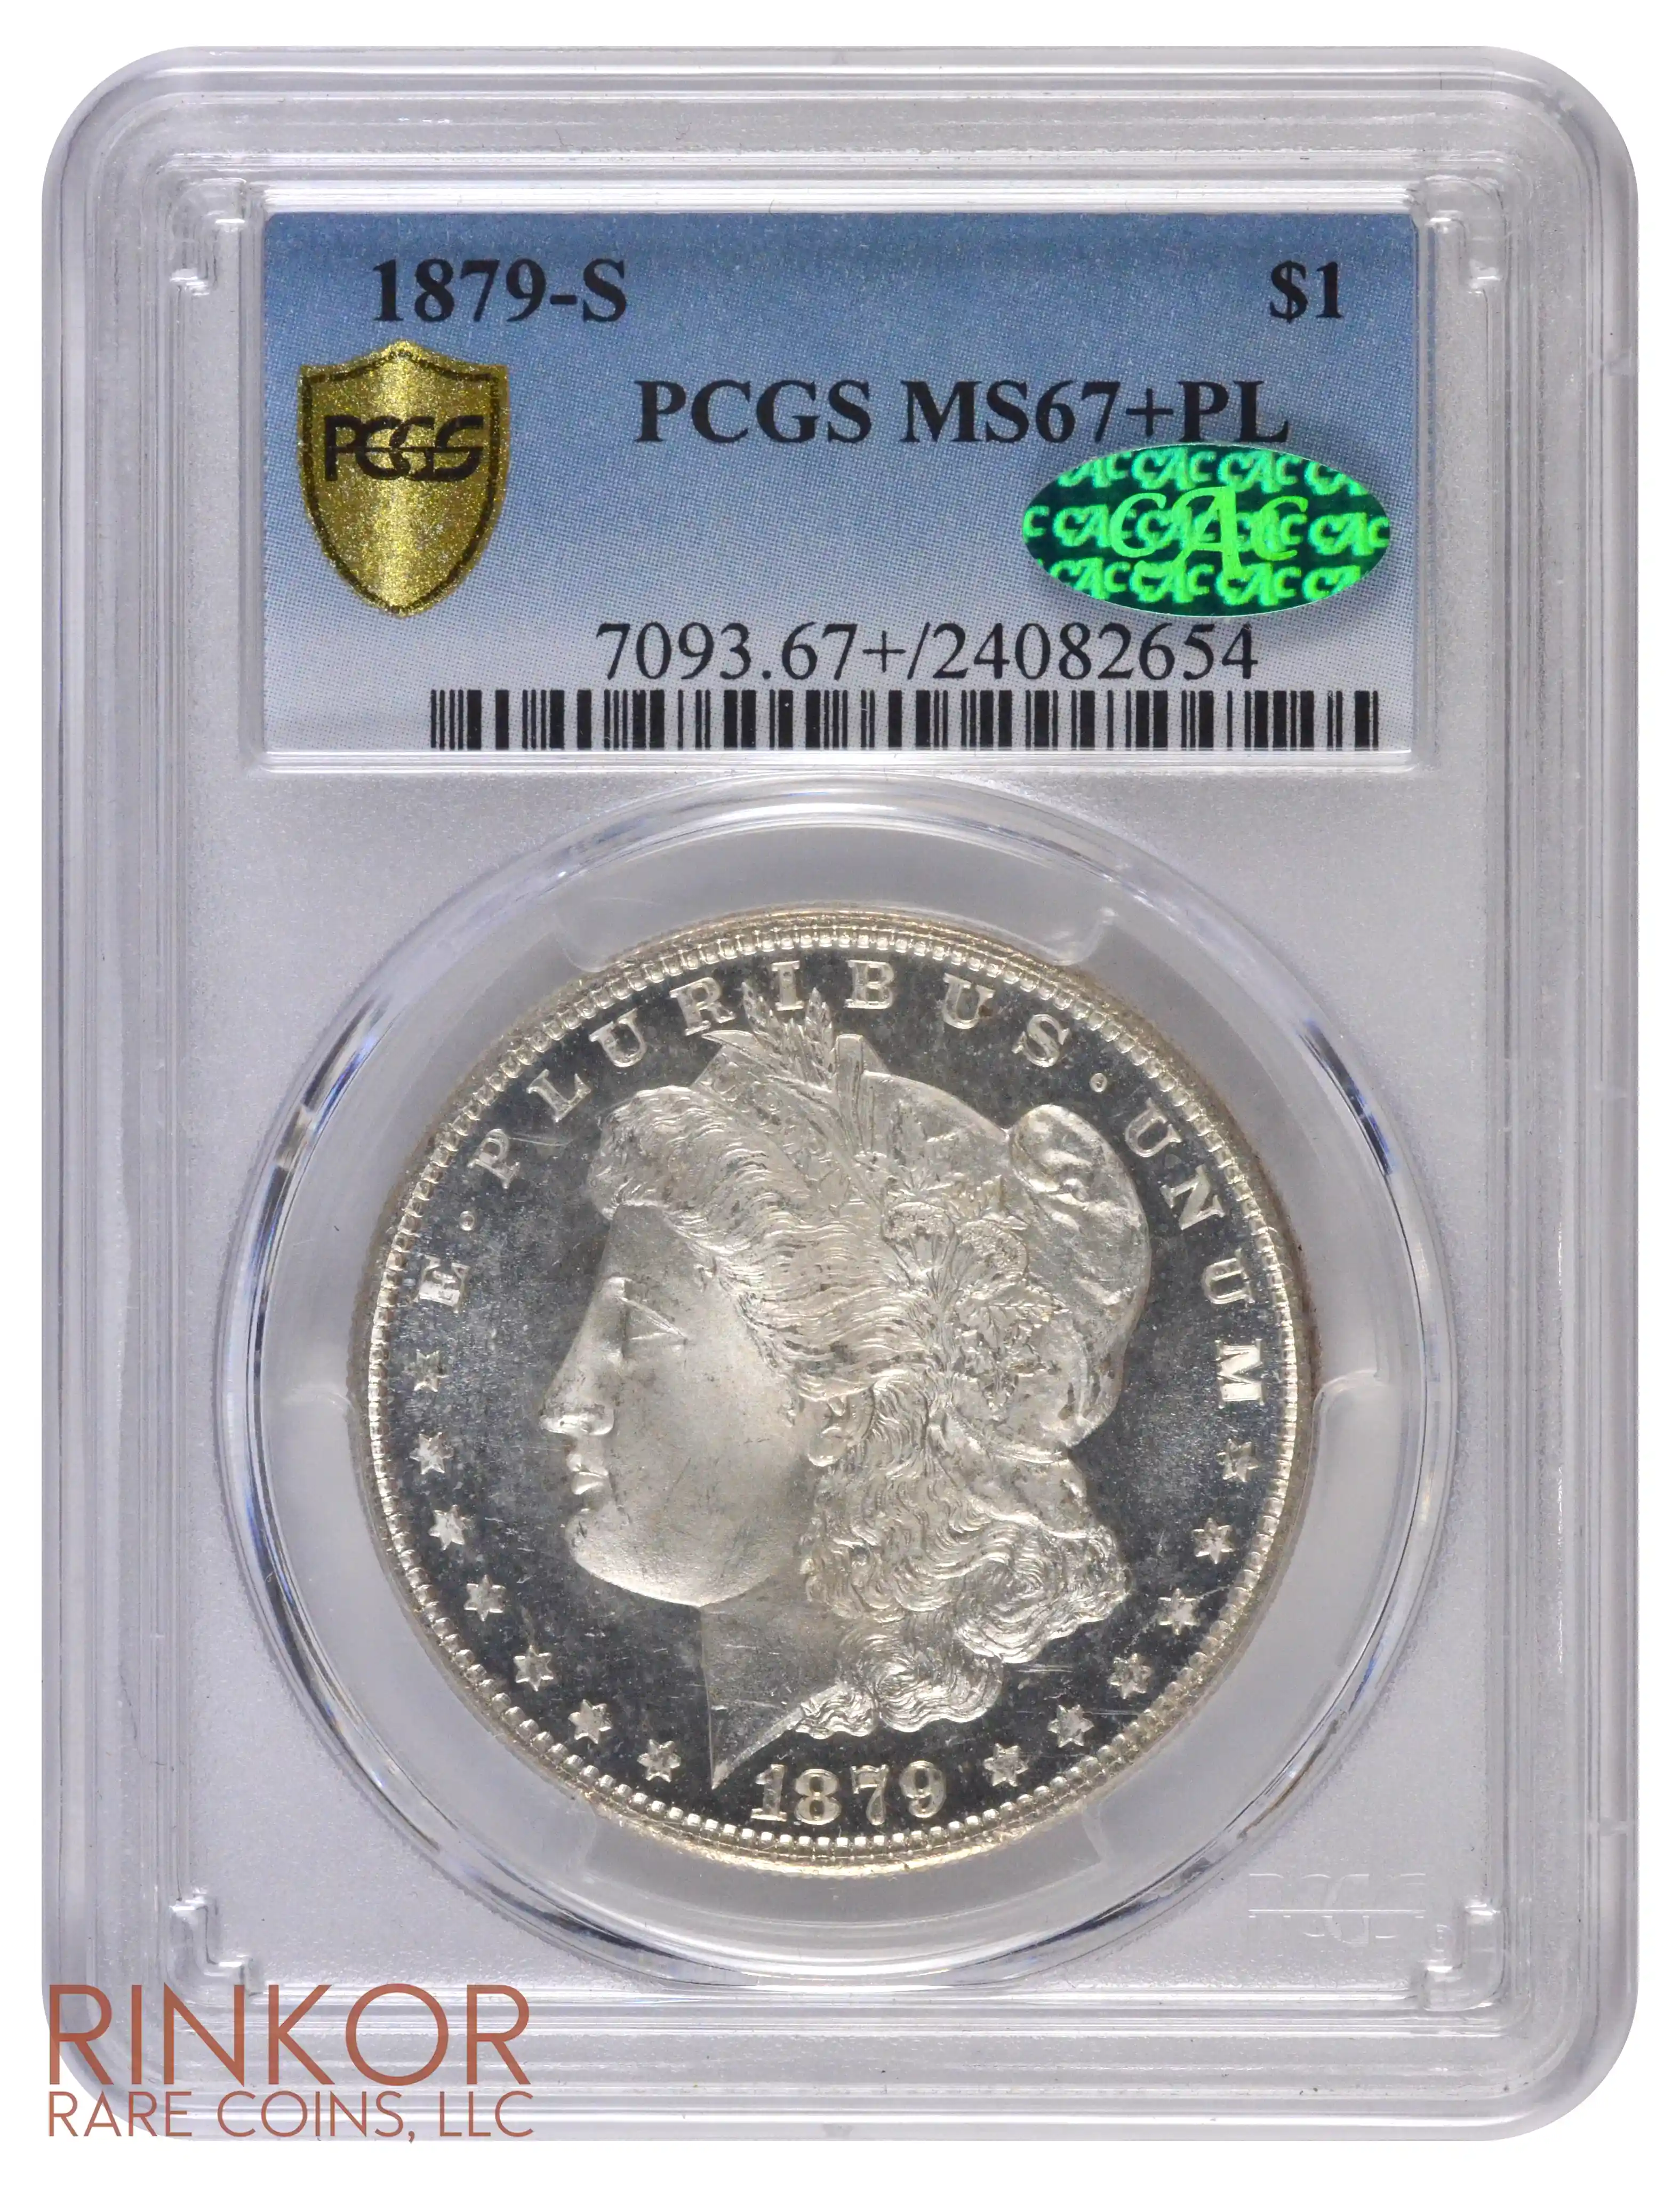 1879-S $1 PCGS MS 67+ PL CAC